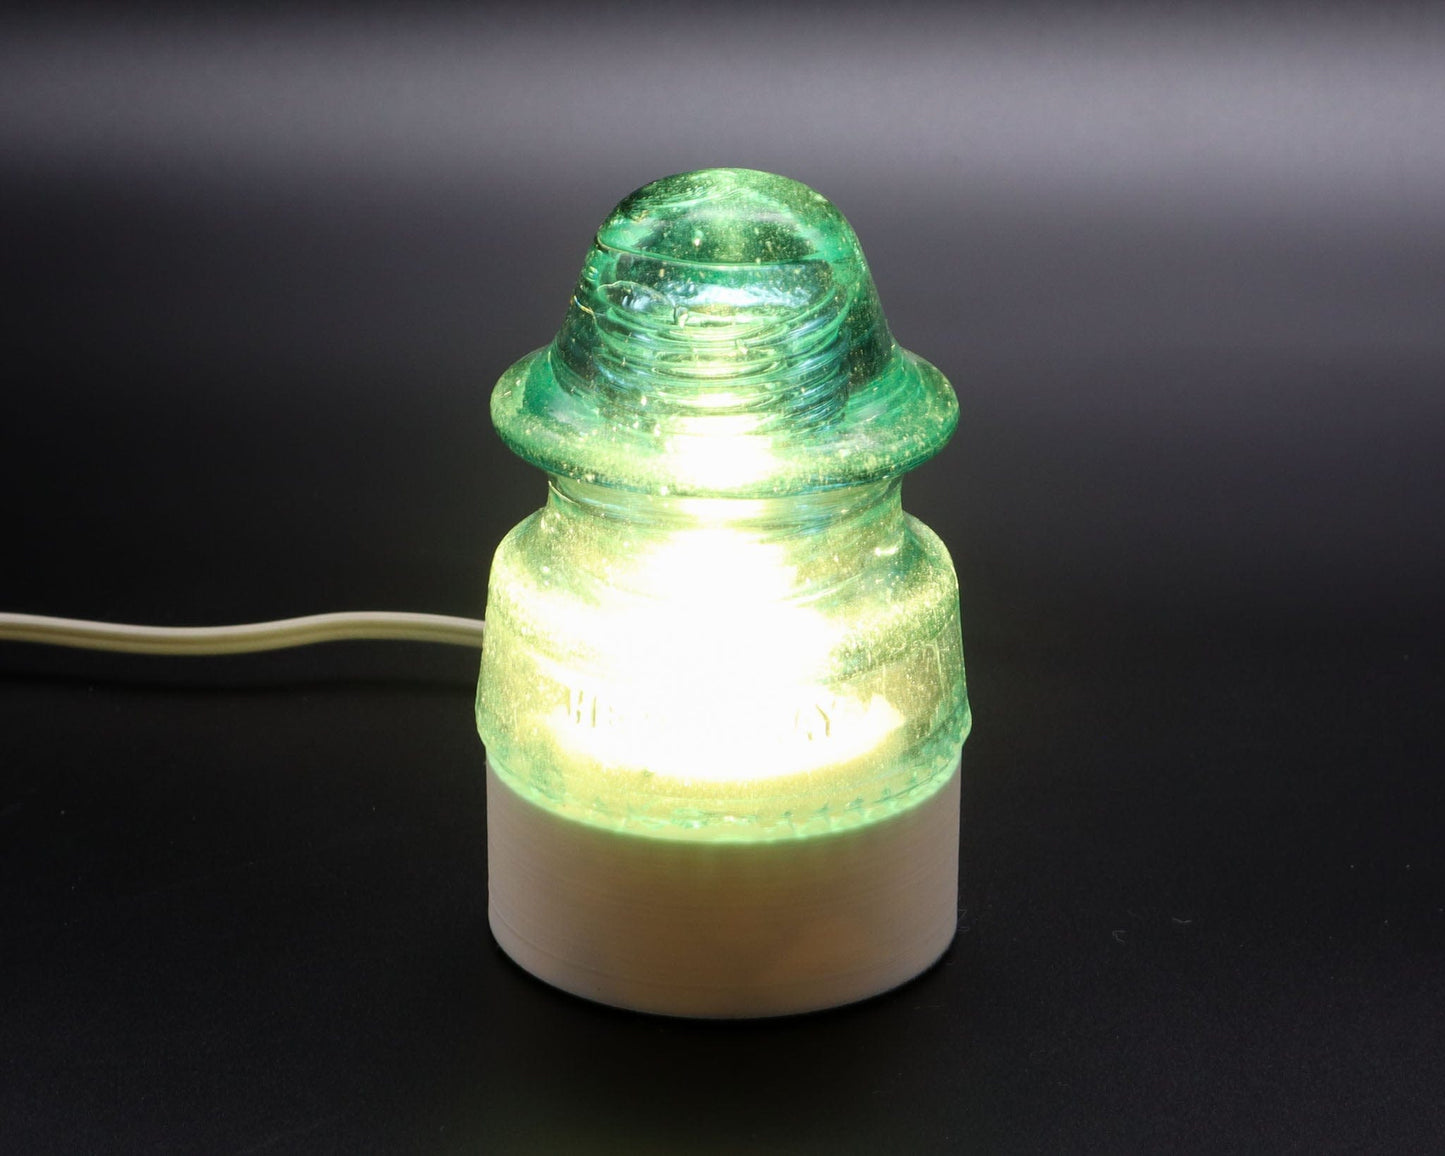 LightAndTimeArt Lamp base Lamp Base for "Hemingray-20, Petticoat" Glass Insulators, Industrial Lighting, Man Cave Decor